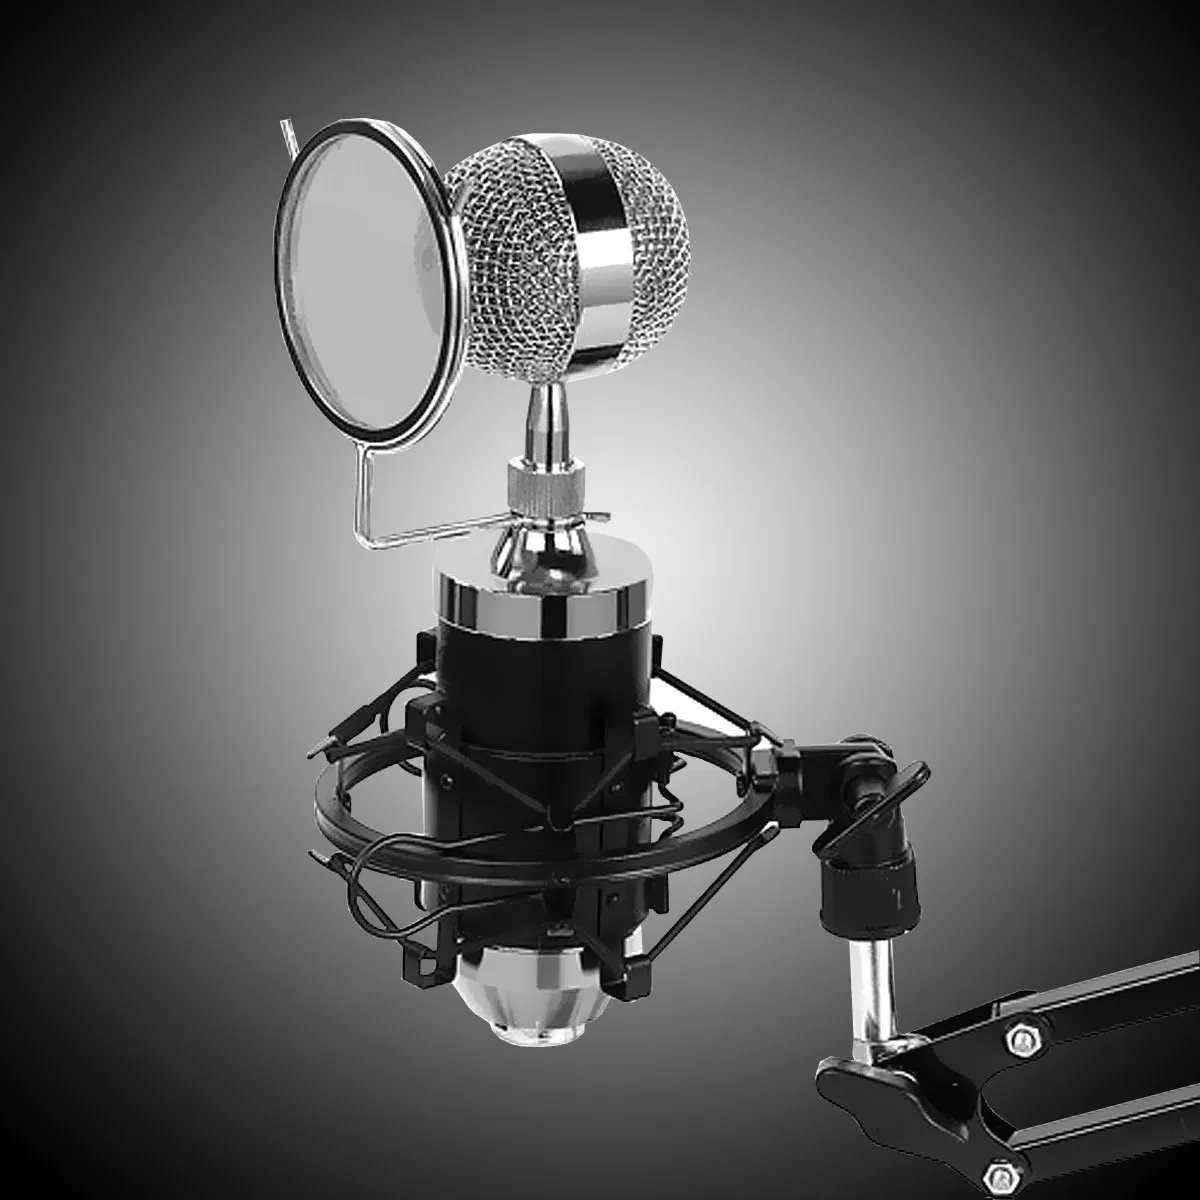 IRIN 3.5mm Sound Studio Recording Microphone Network Singing Podcast Mic Plug Stand Holder Filter KTV Karaoke Live Equipment